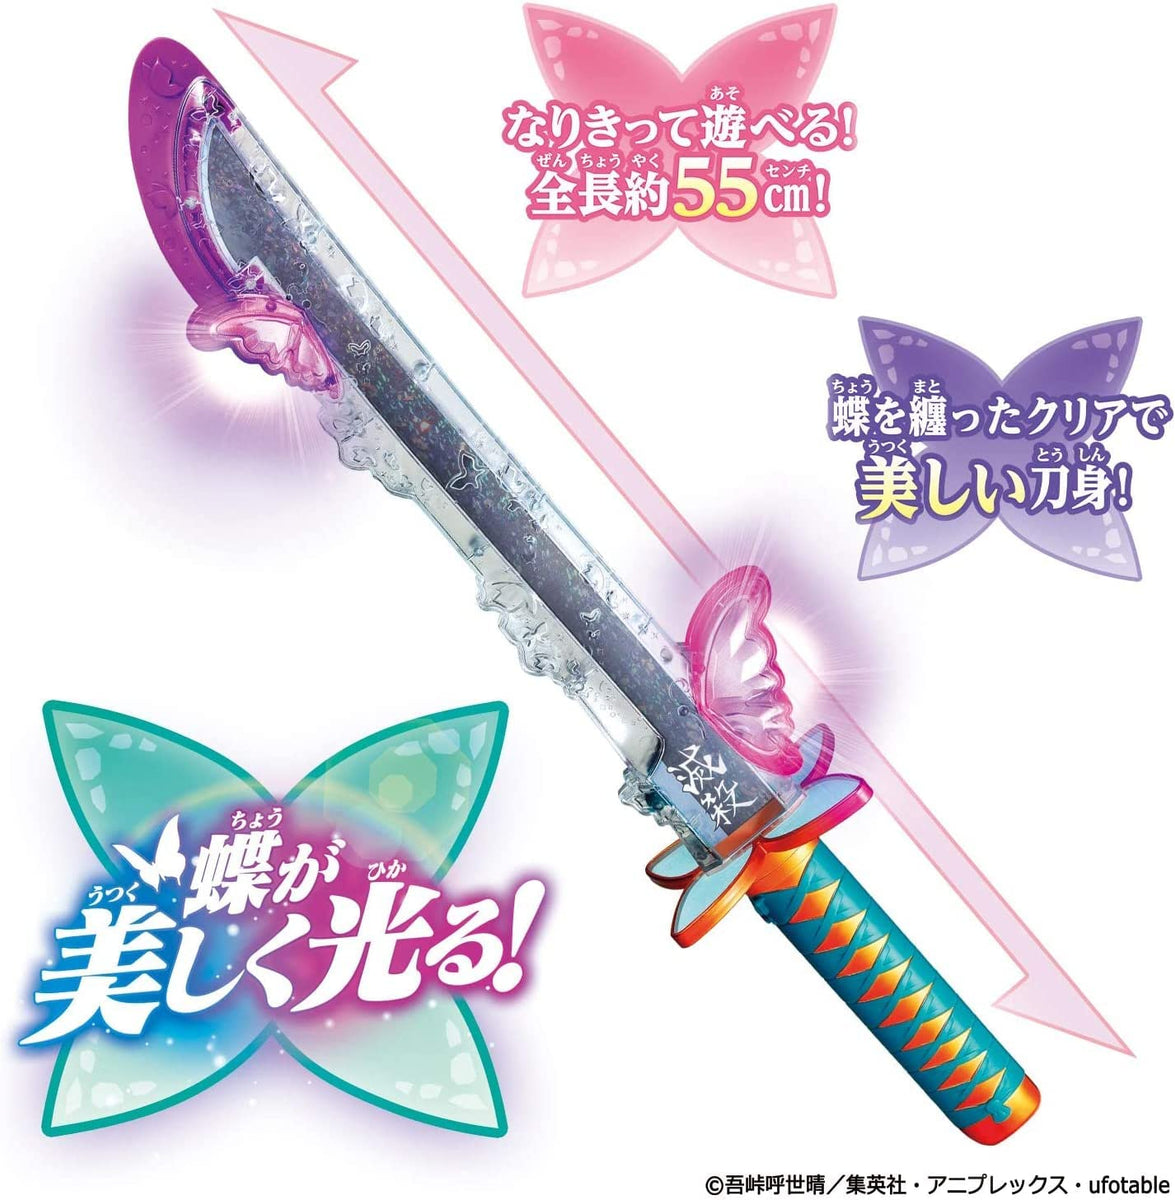 [DSRPG] Halloween Nichirin Sword Showcase